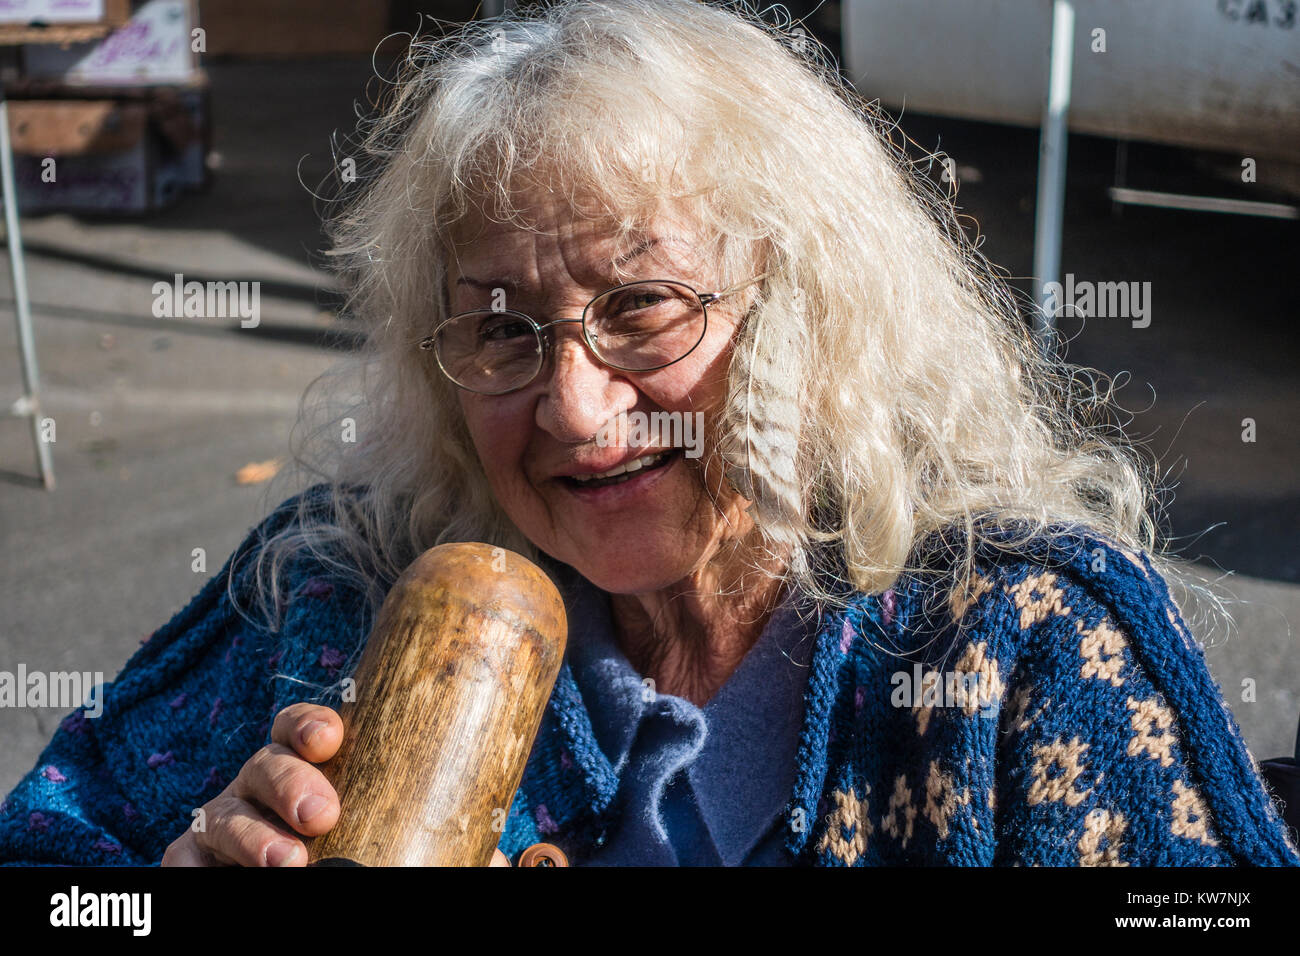 Woman playing didgeridoo at the Santa Barbara, California farmer's market. The didgeridoo (also known as a didjeridu) is a wind instrument. Stock Photo